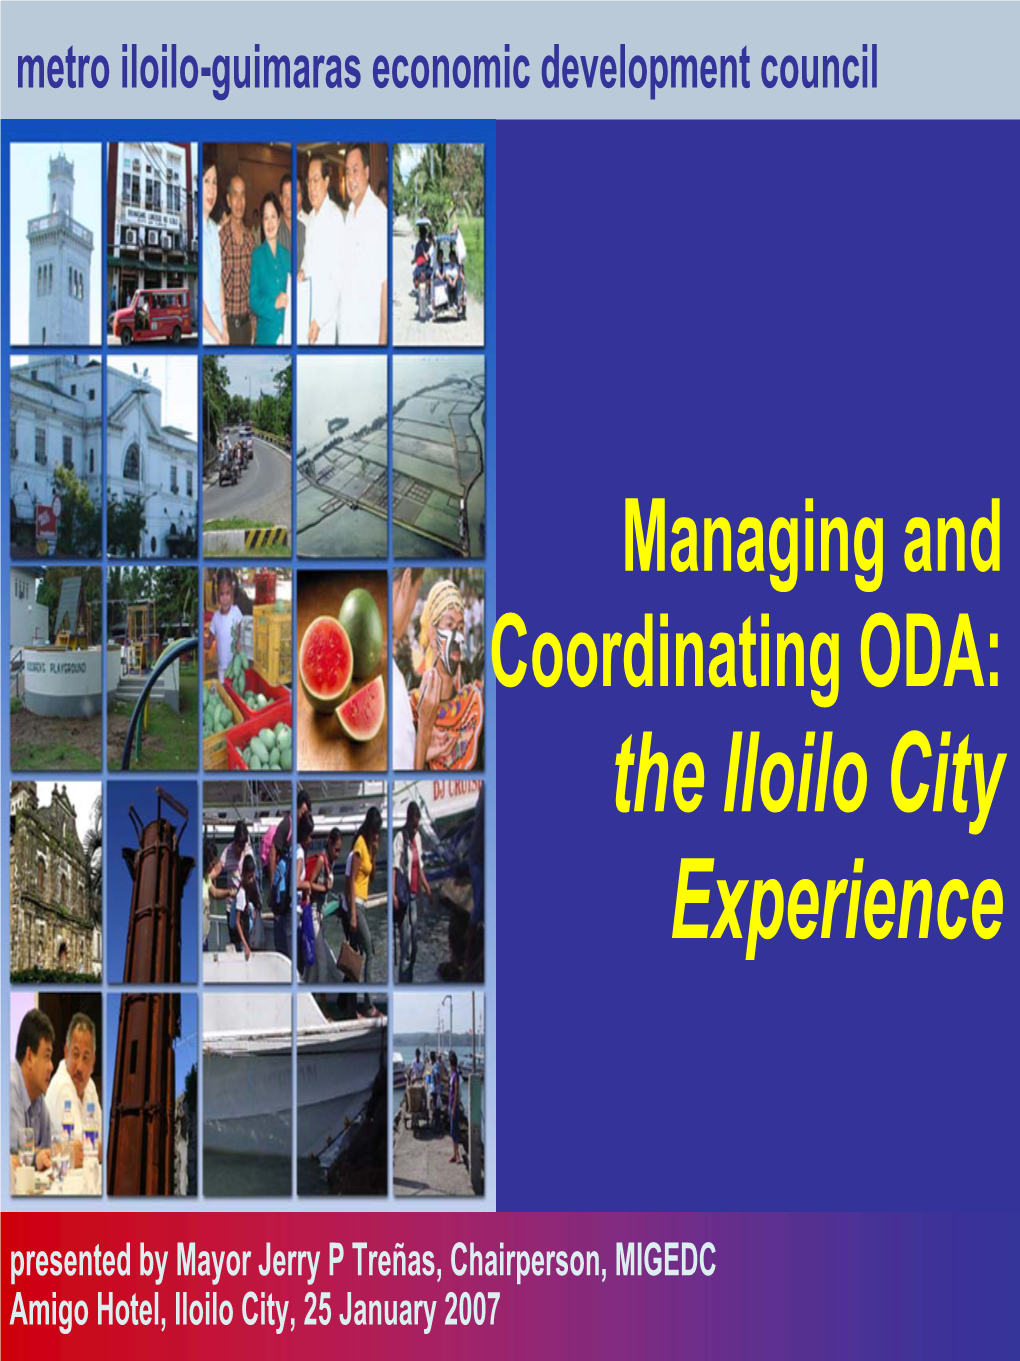 The Iloilo Experience by Mayor Jerry Trenas